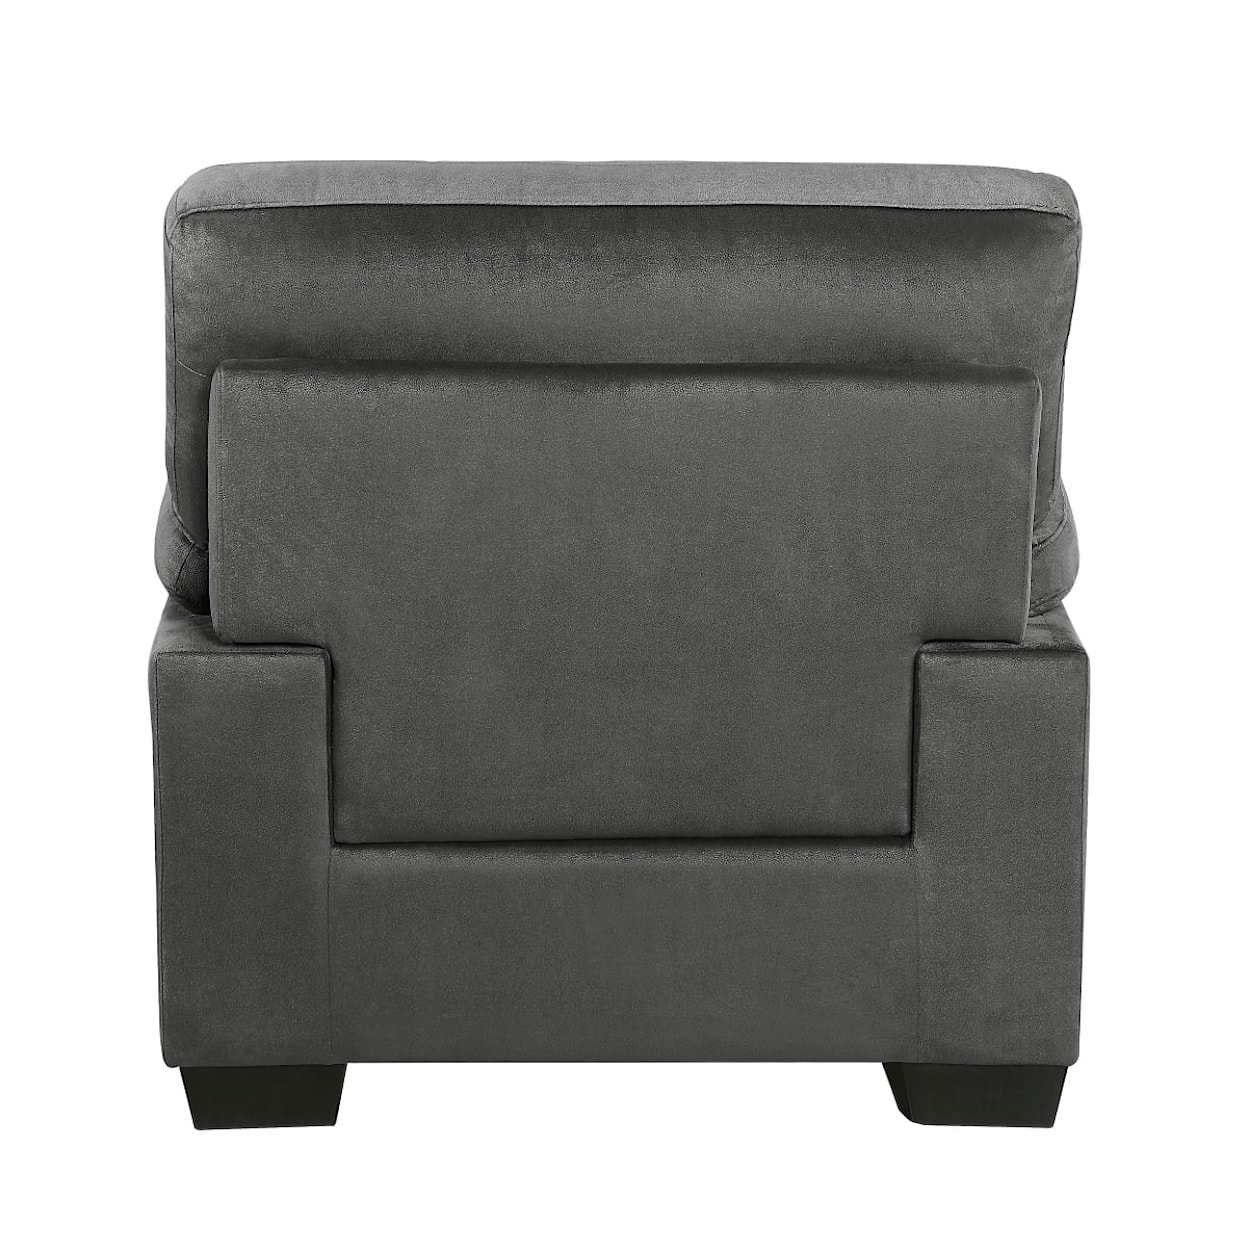 Homelegance Furniture Keighly Chair